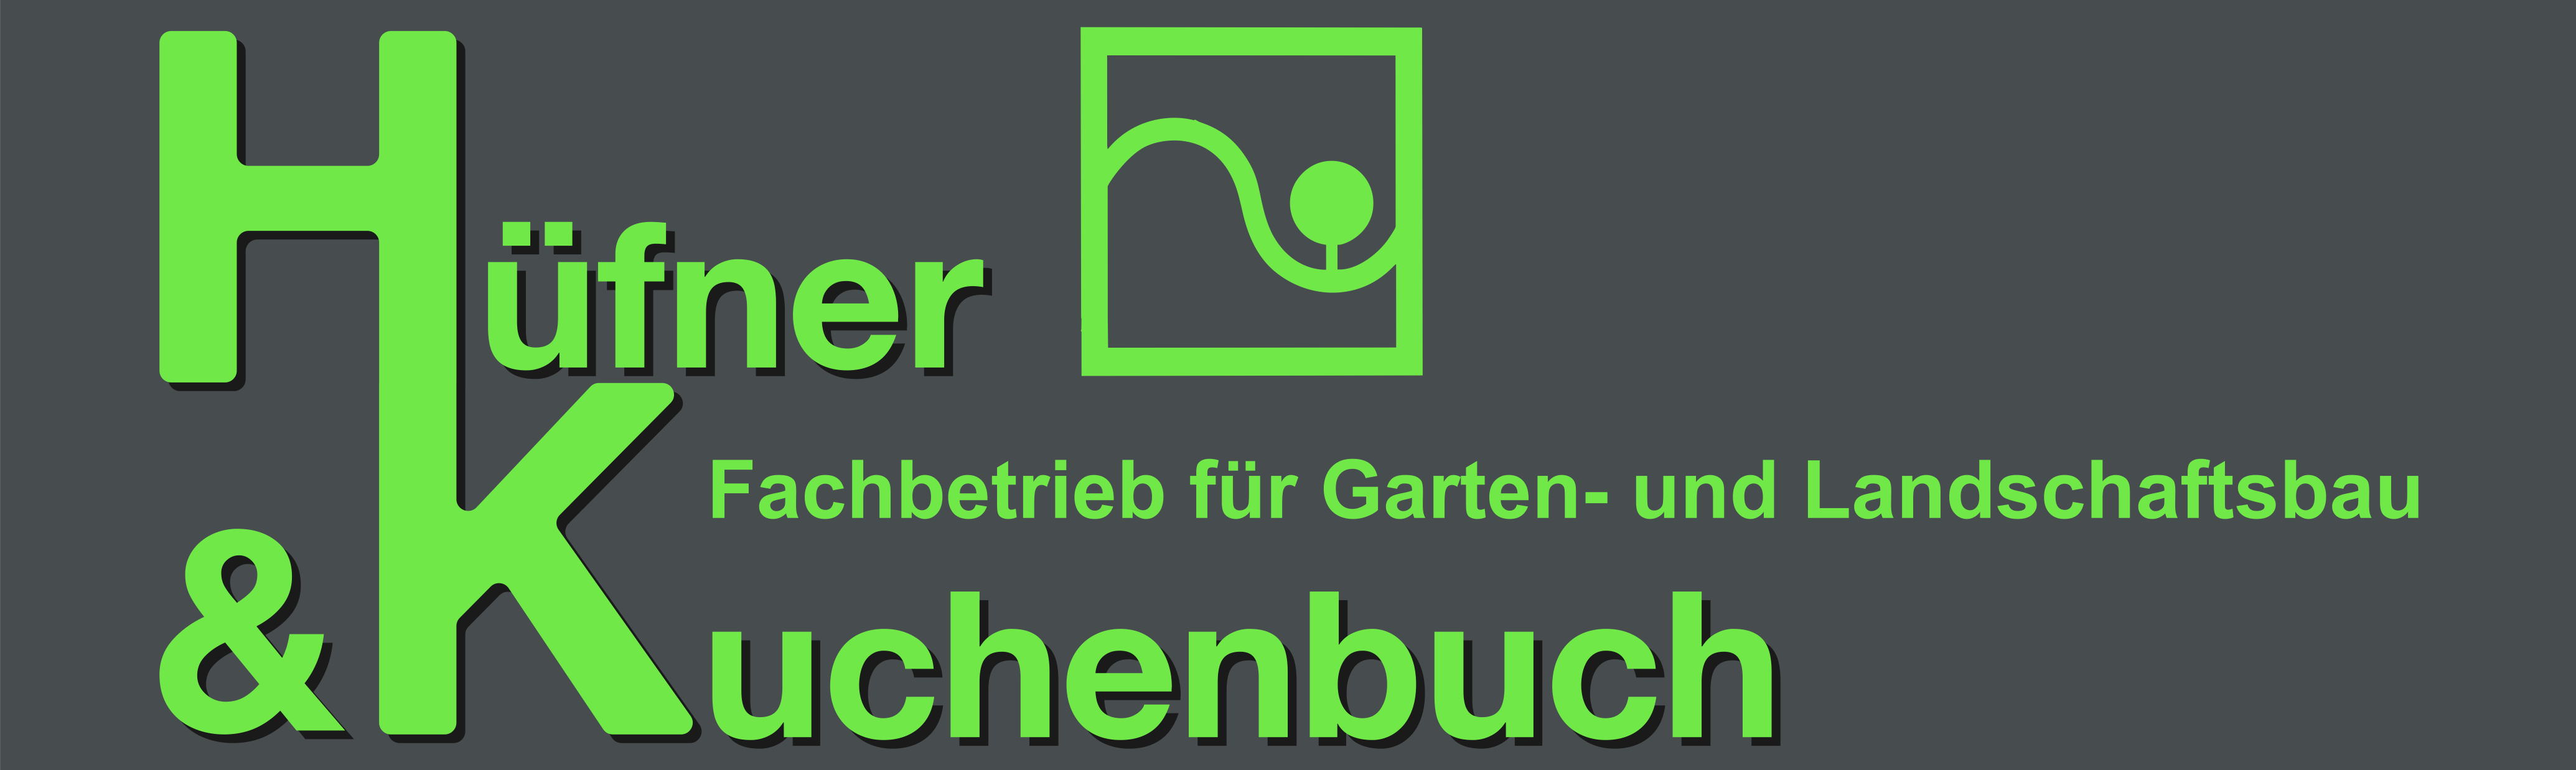 Hüfner & Kuchenbuch GmbH